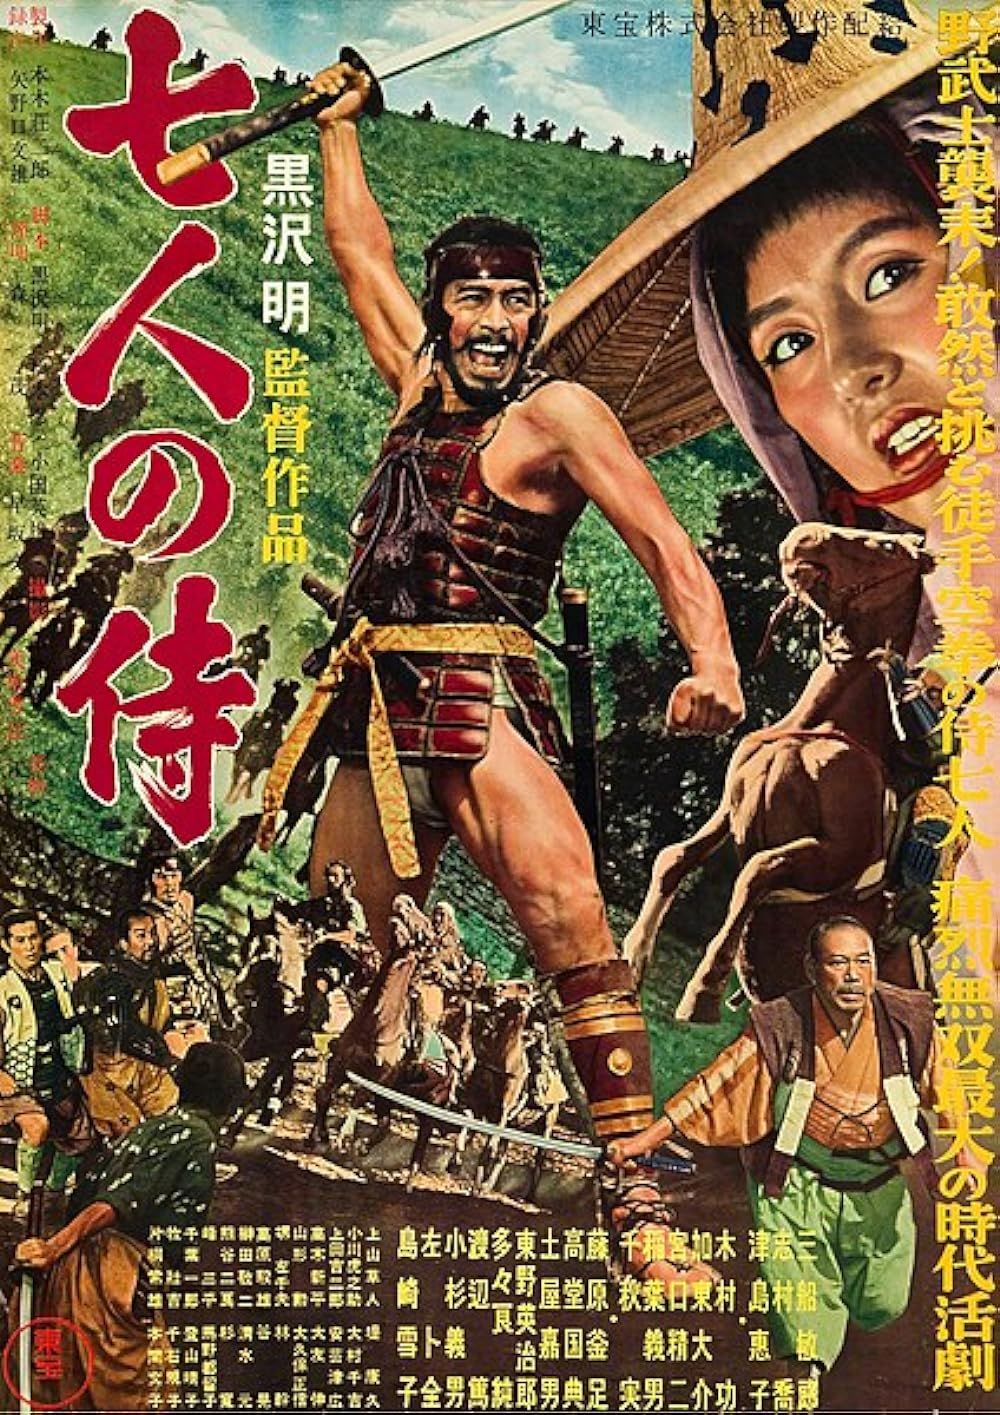 Toshirô Mifune in Seven Samurai (1954)